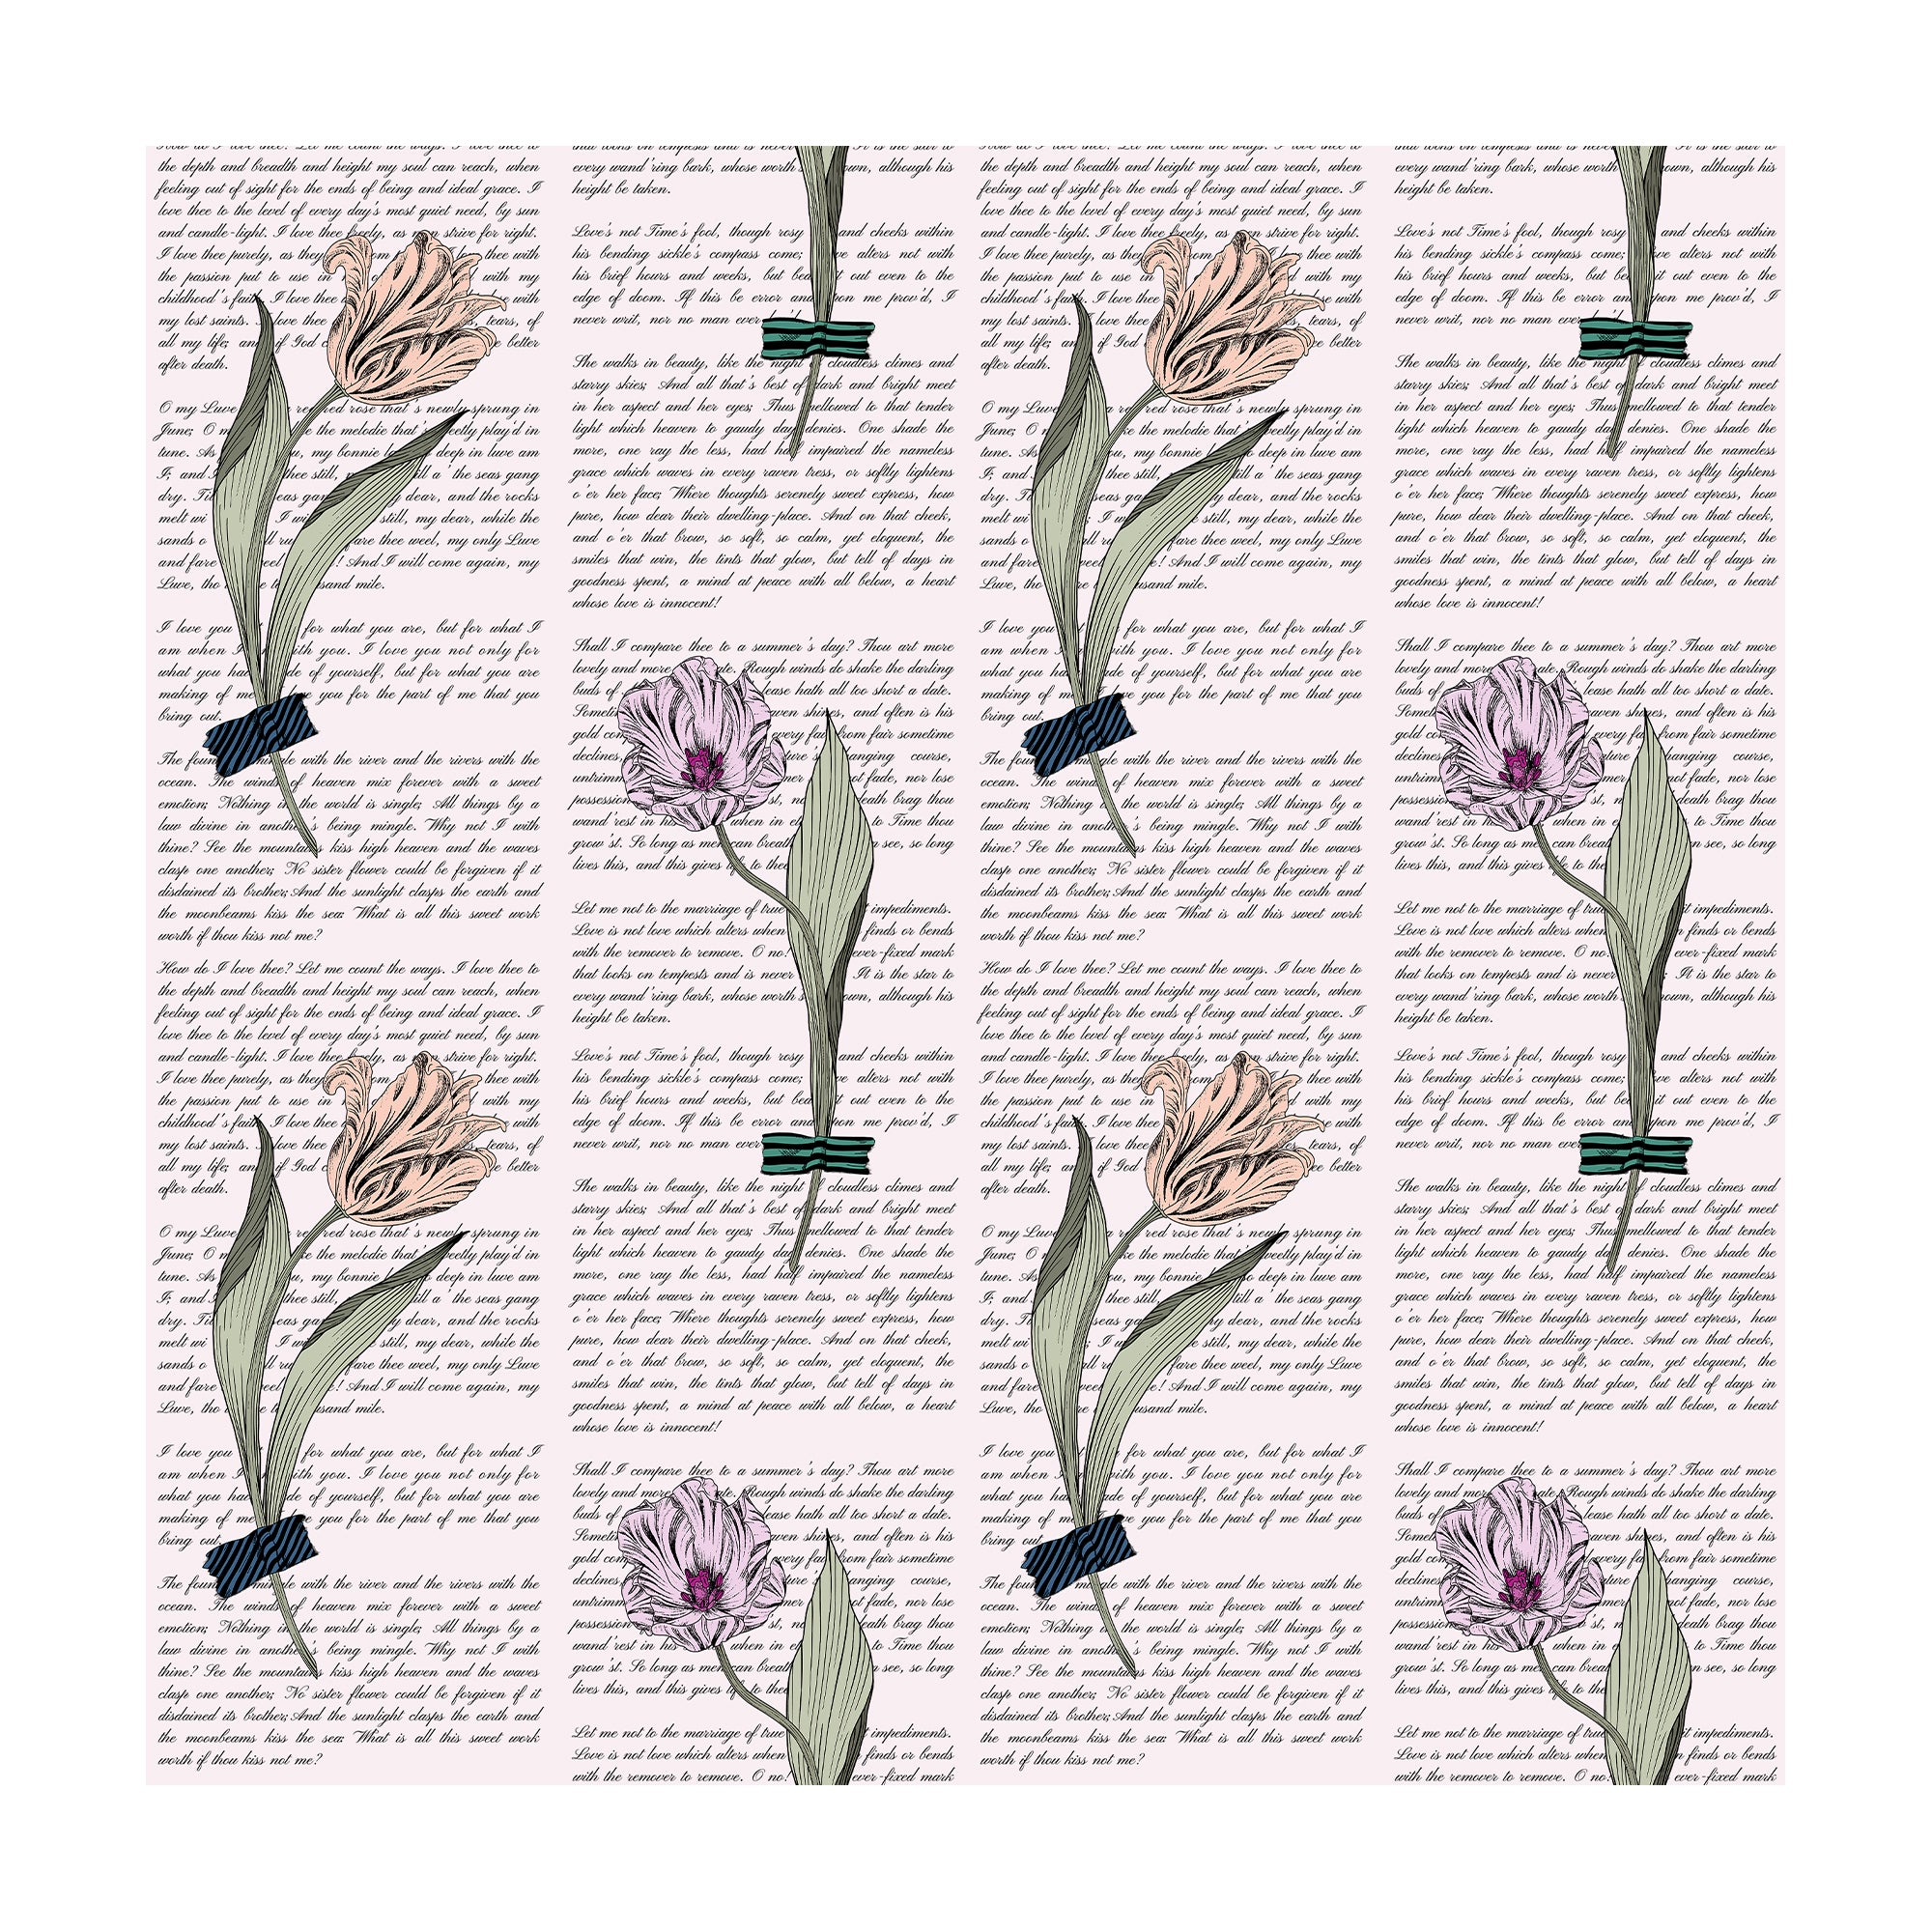 Printed Cardstock Pack - Botanical Garden, 12 X 12inch, 12Designs, 250gsm, 12Sheets